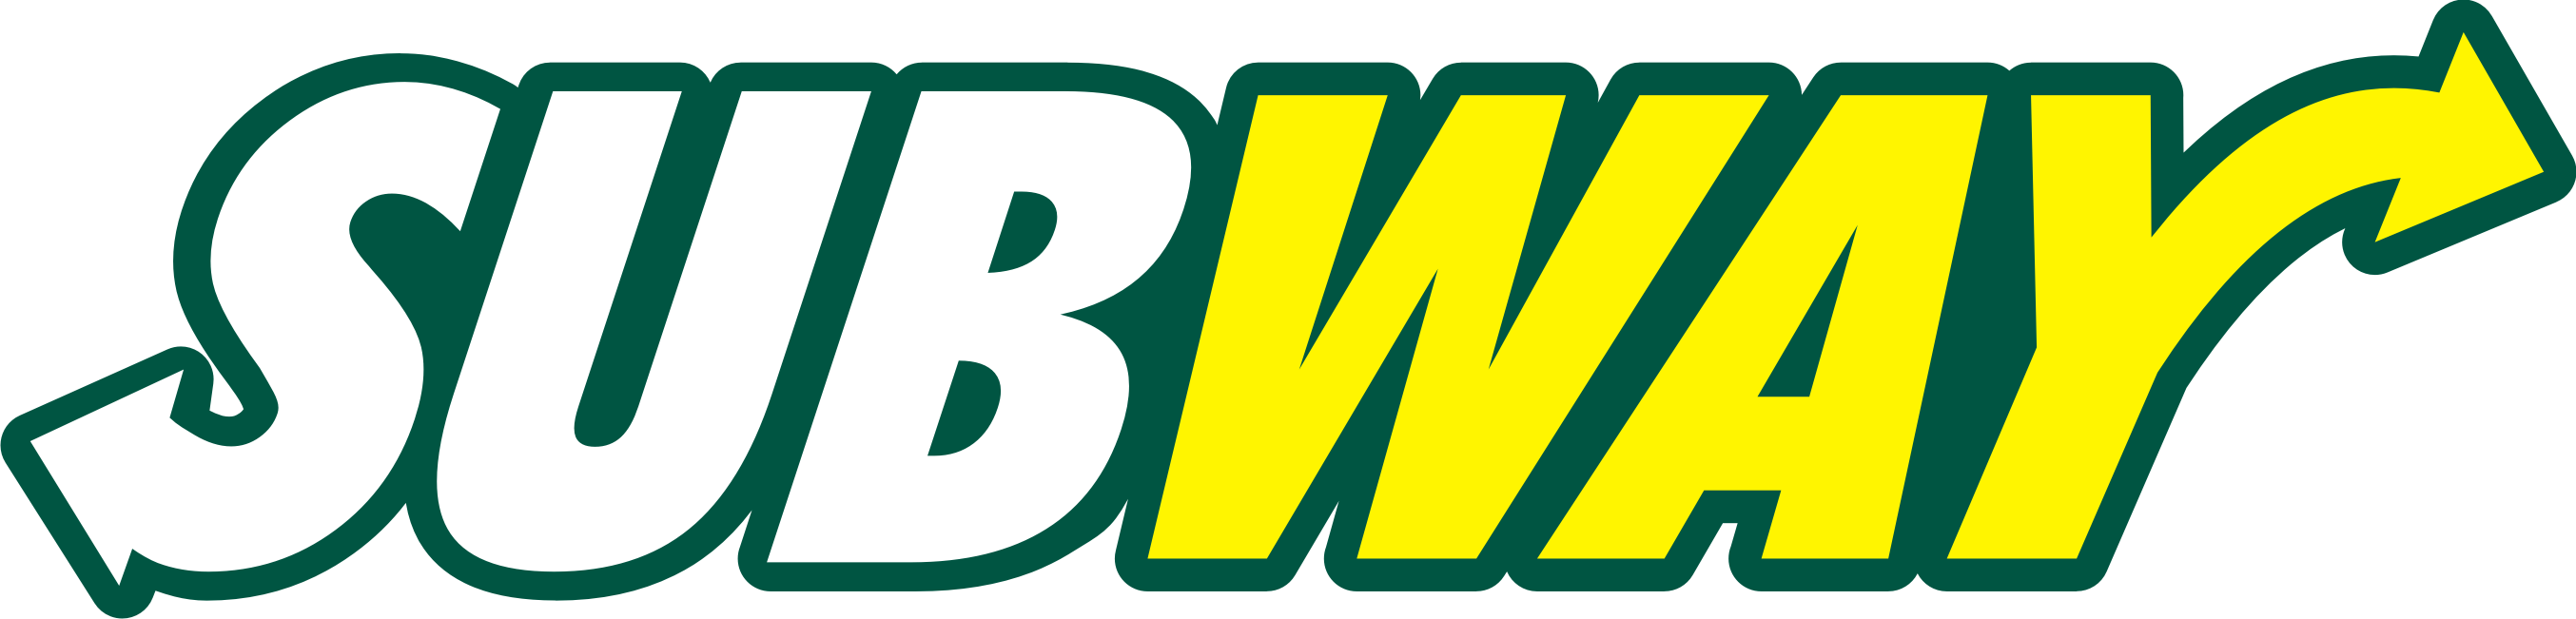 Subway 2018 Logo - Subway Logo | Subway Logo Design Vector Free Download